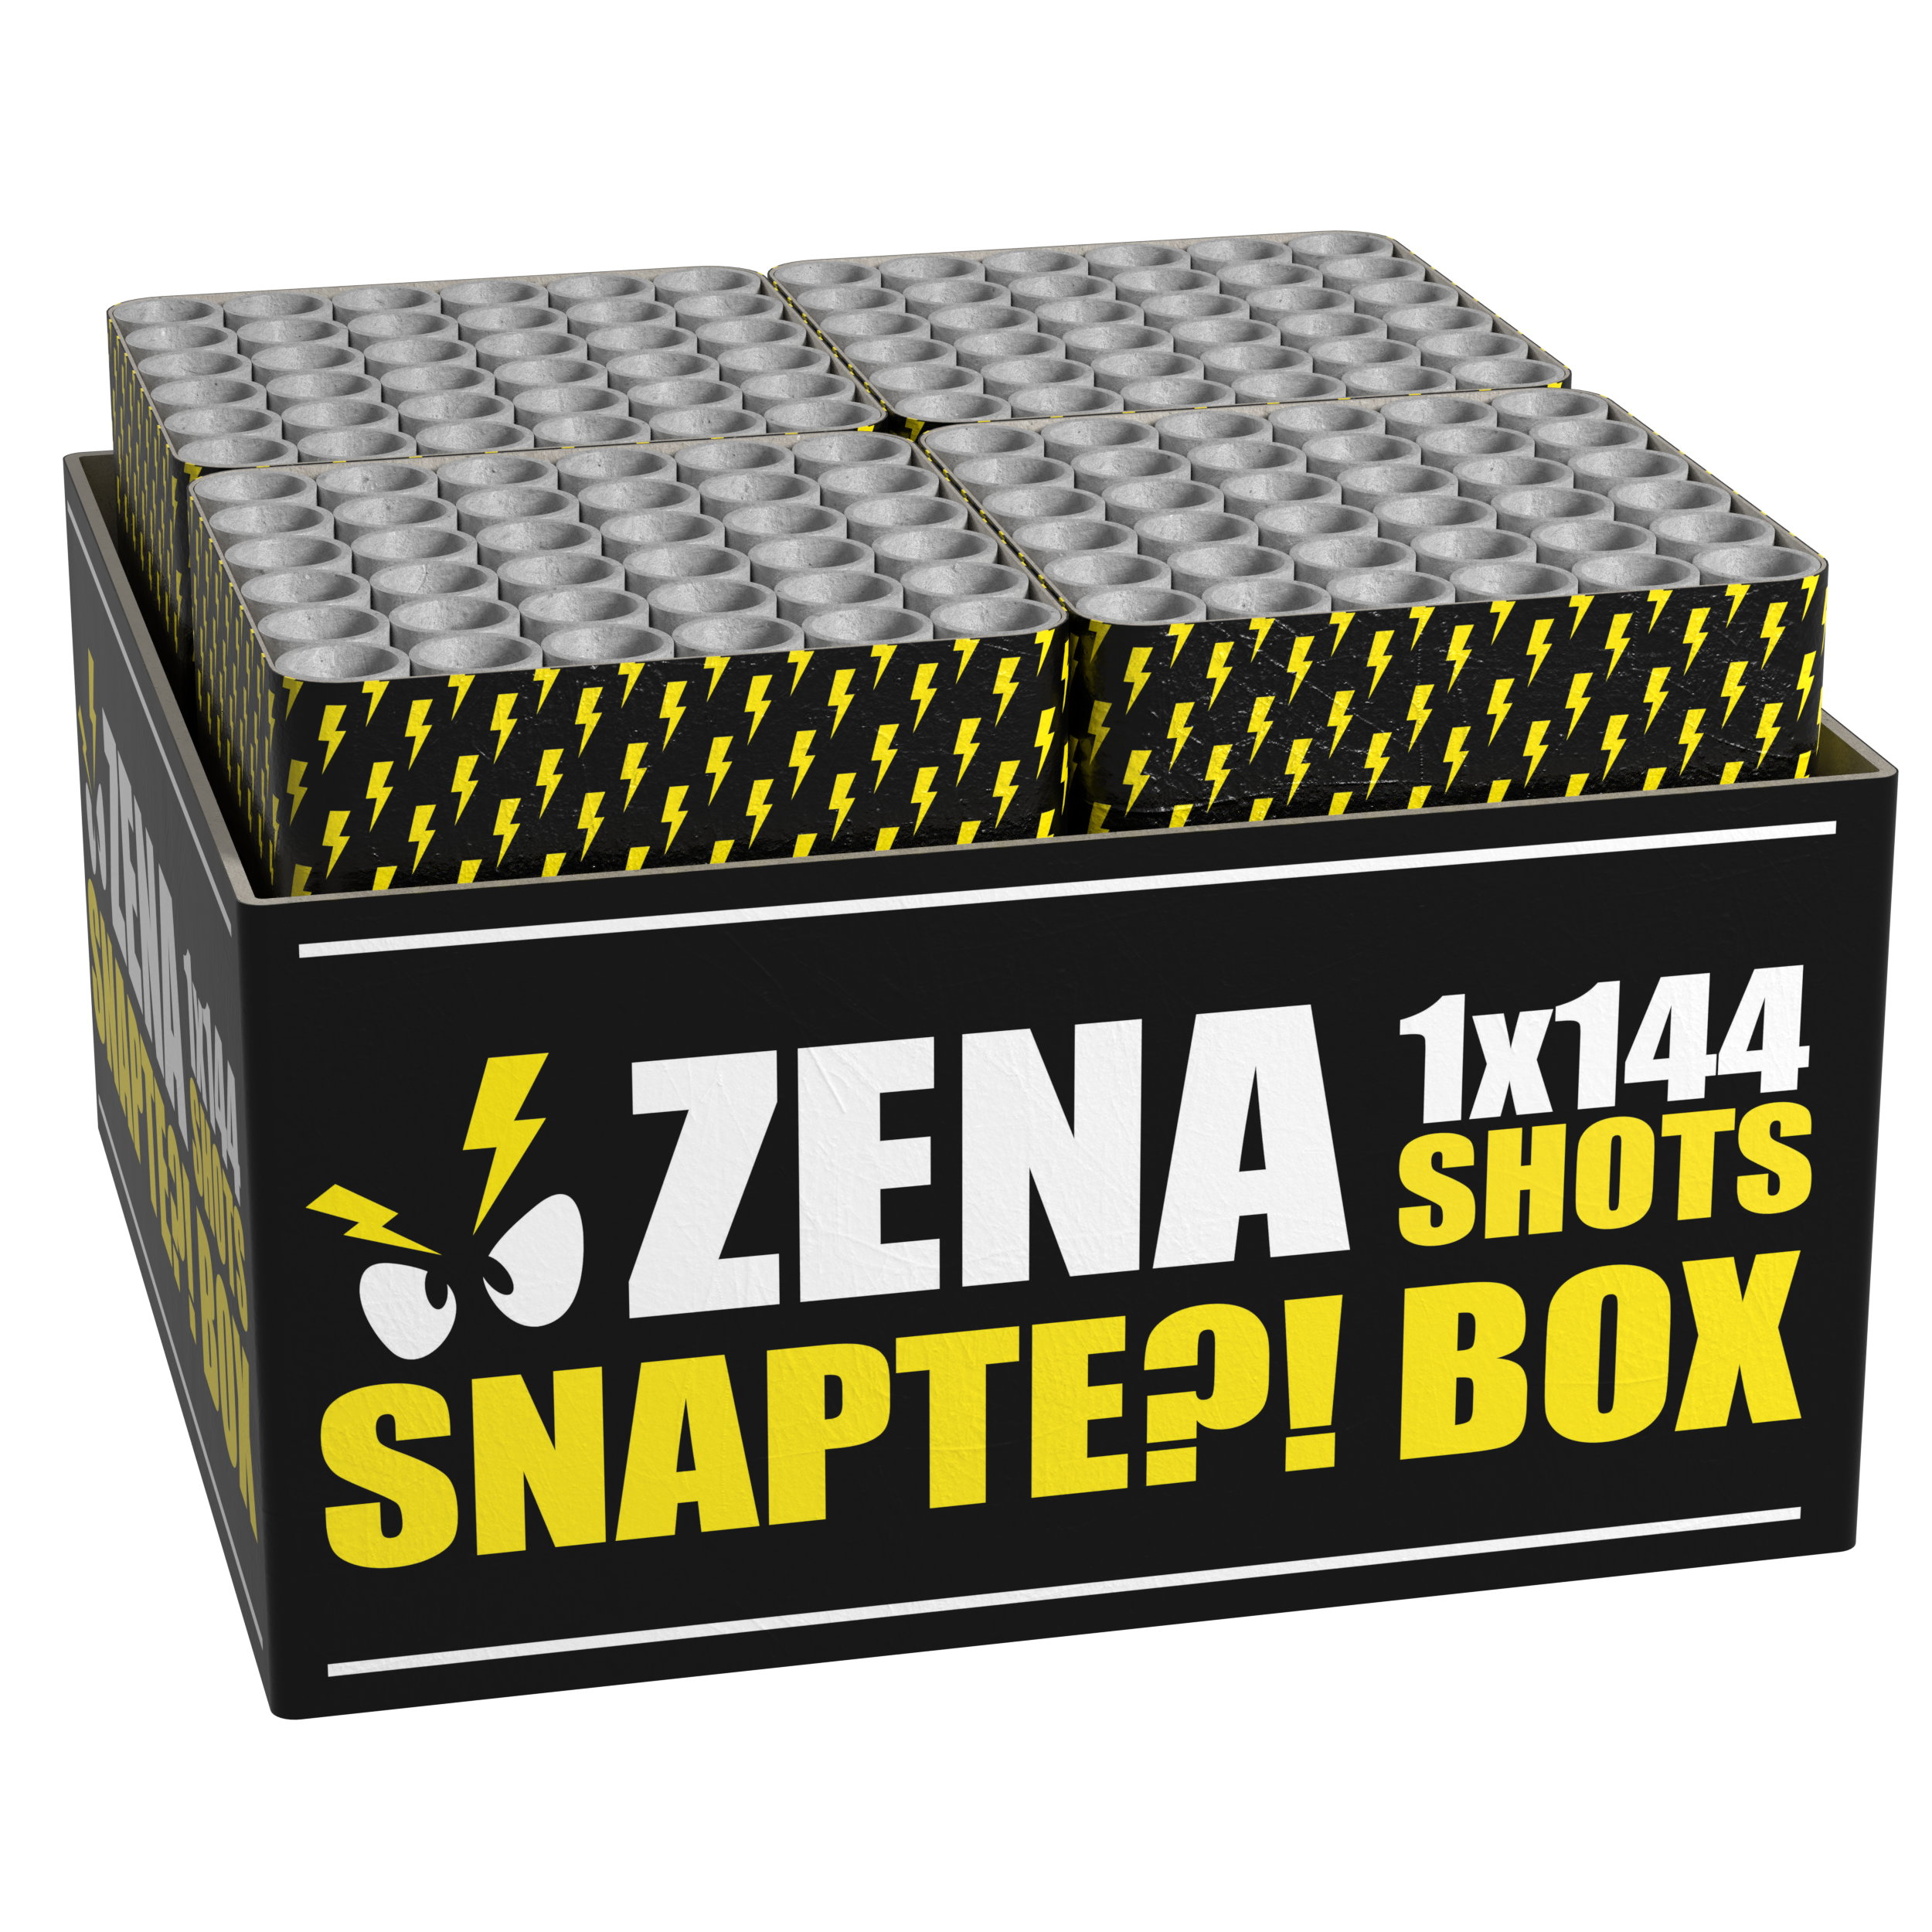 01620 Zena Snapte! box.png